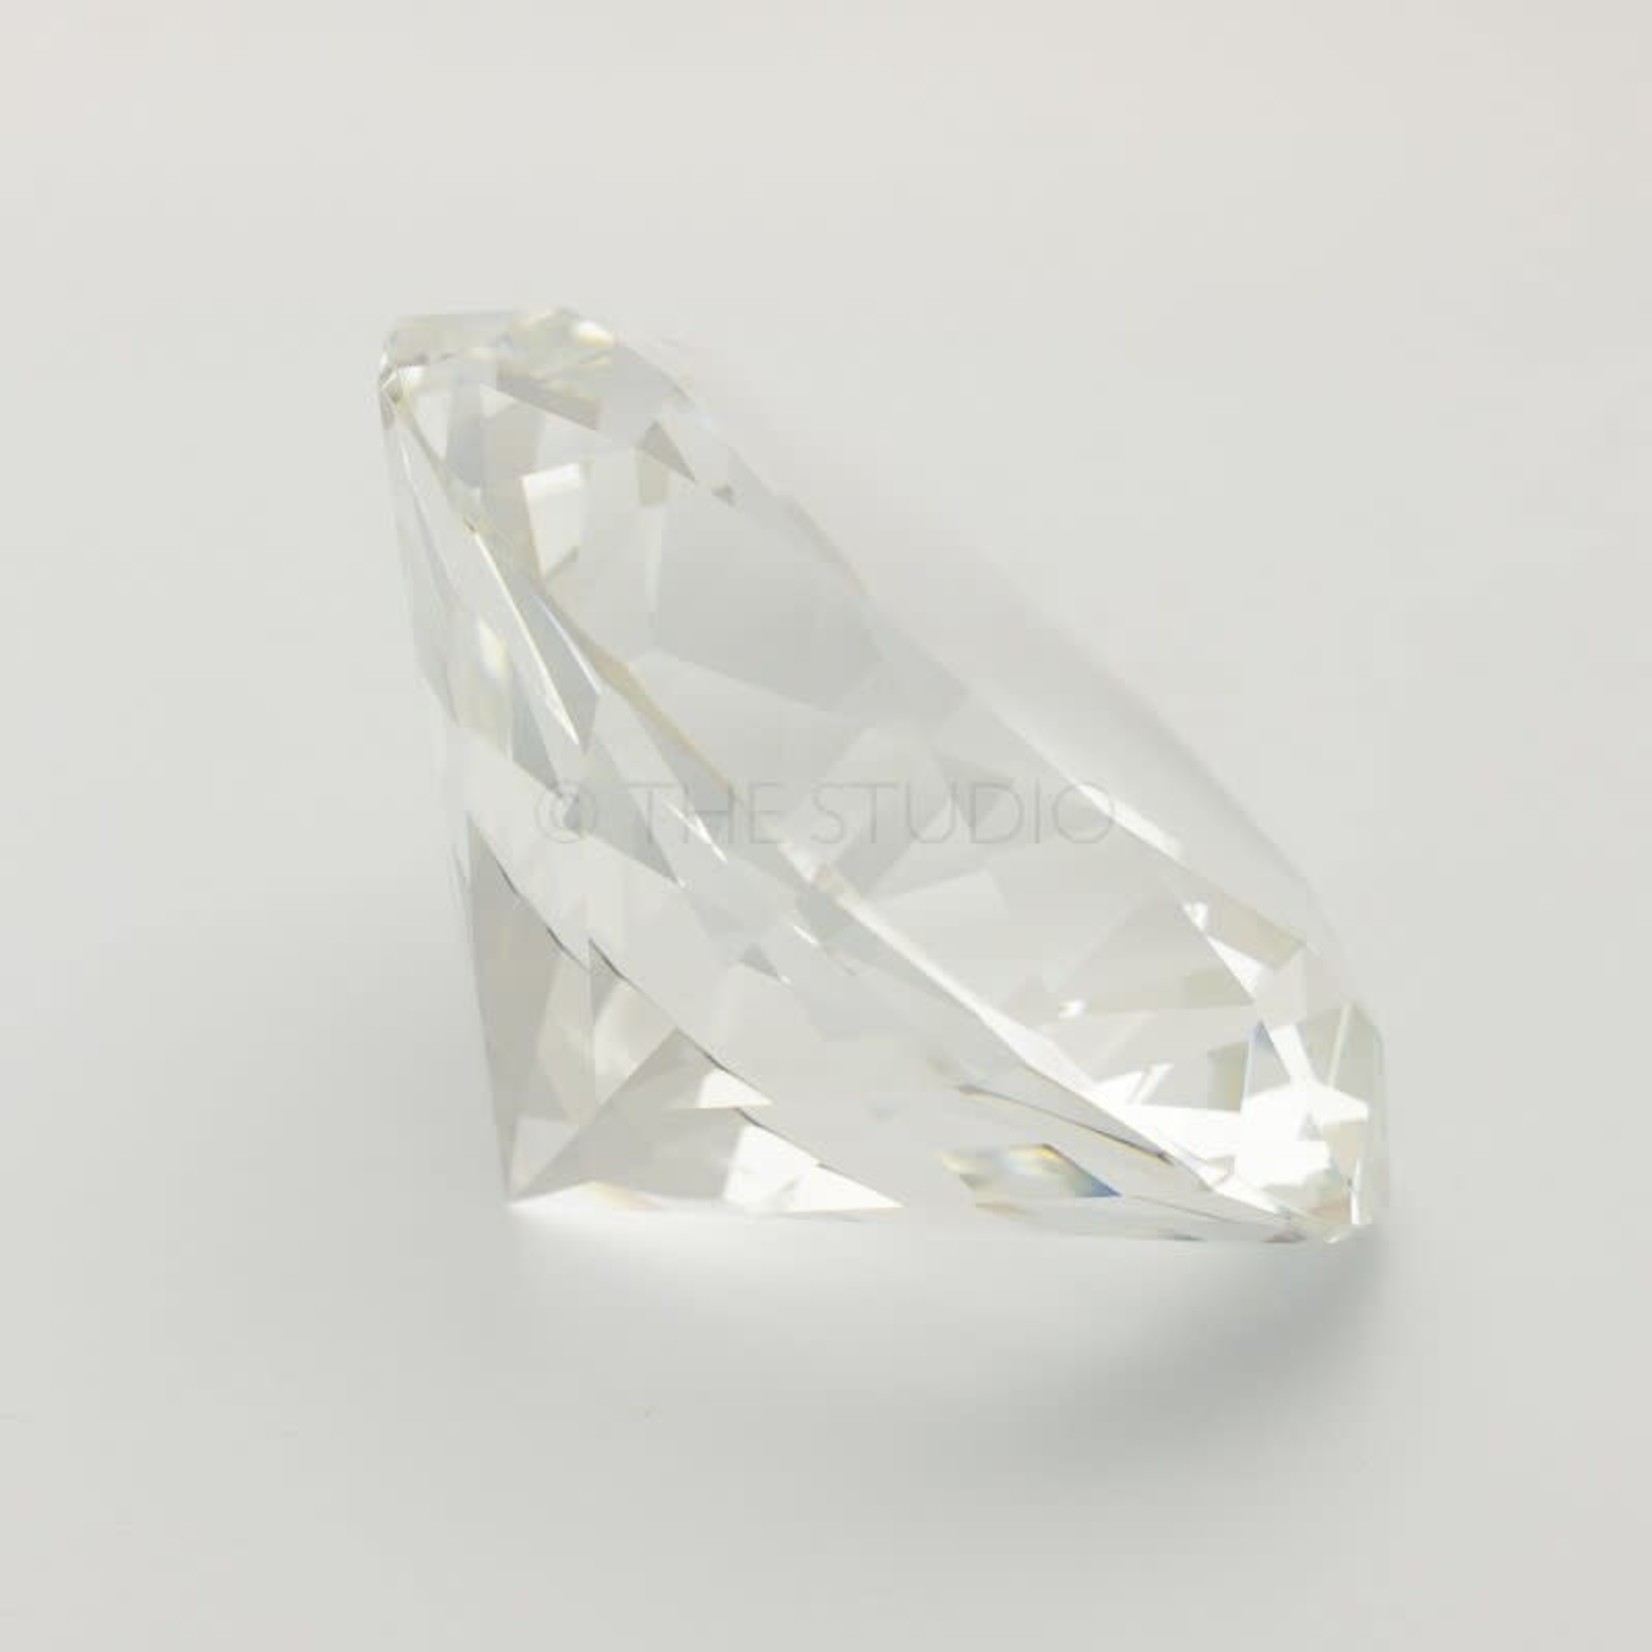 The Studio The Studio - Display Diamond Crystal - Large -